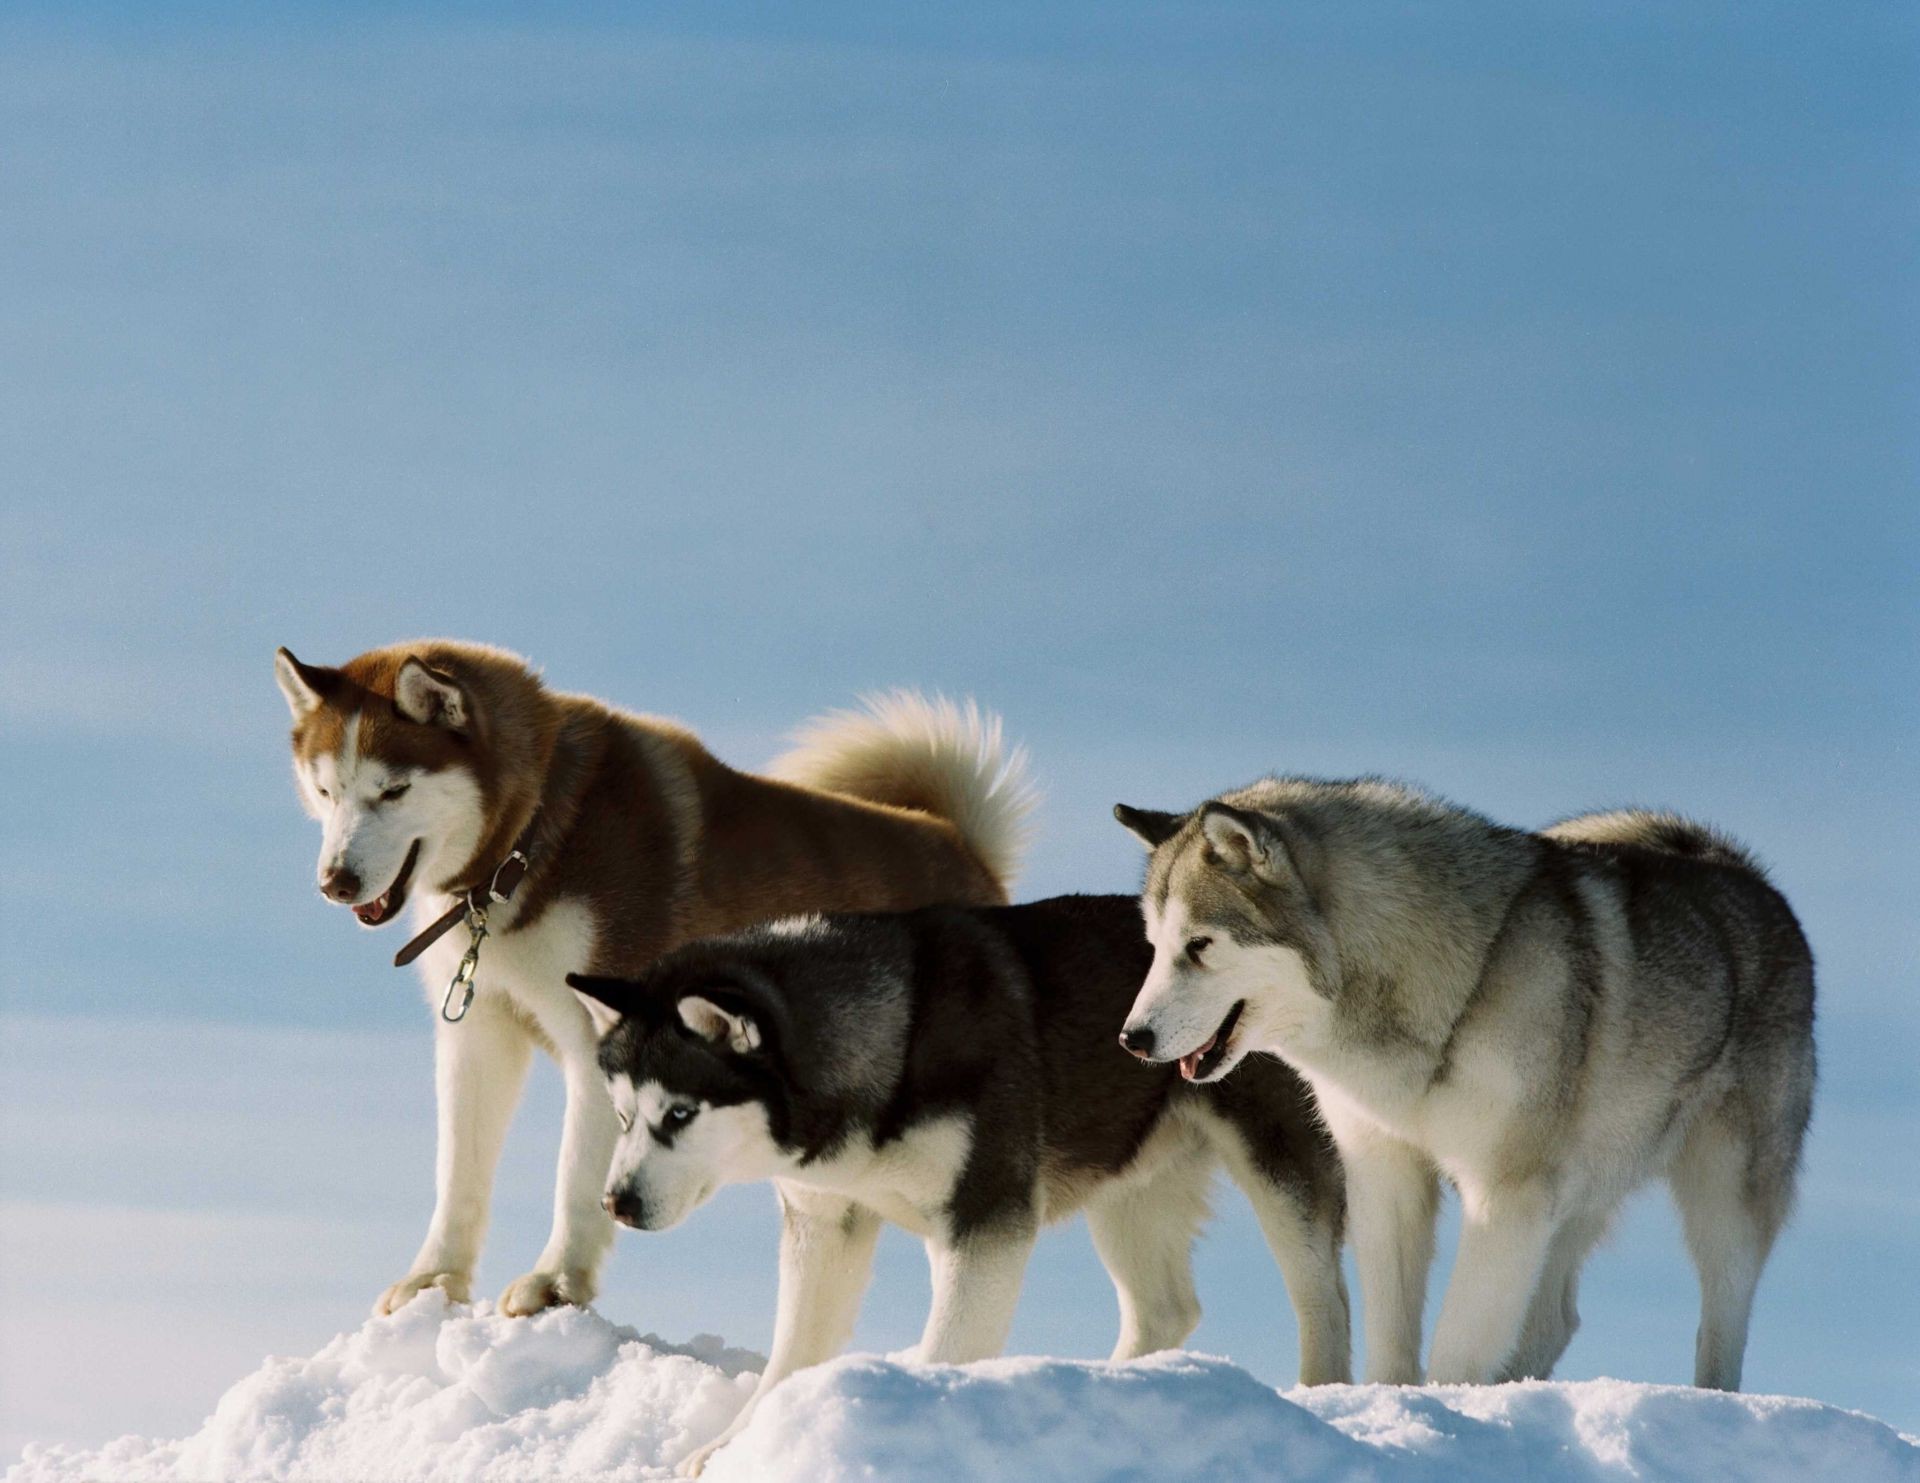 dogs snow dog winter mammal frosty canine wolf sledge eskimo animal two portrait cold outdoors eskimo dog cute one polar greenland